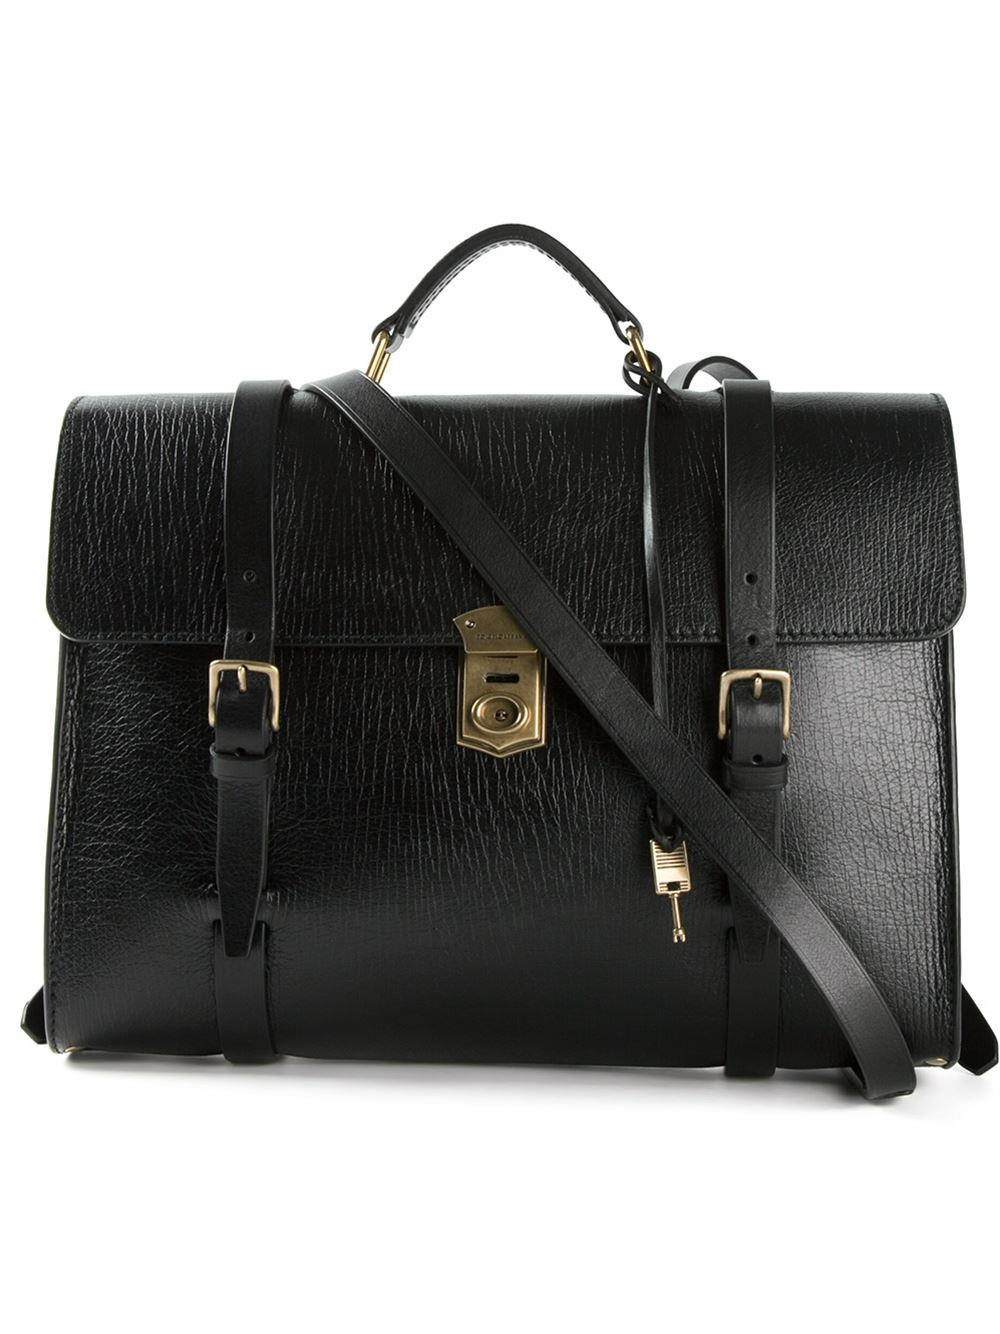 Lyst - Dolce & Gabbana Flap Briefcase in Black for Men